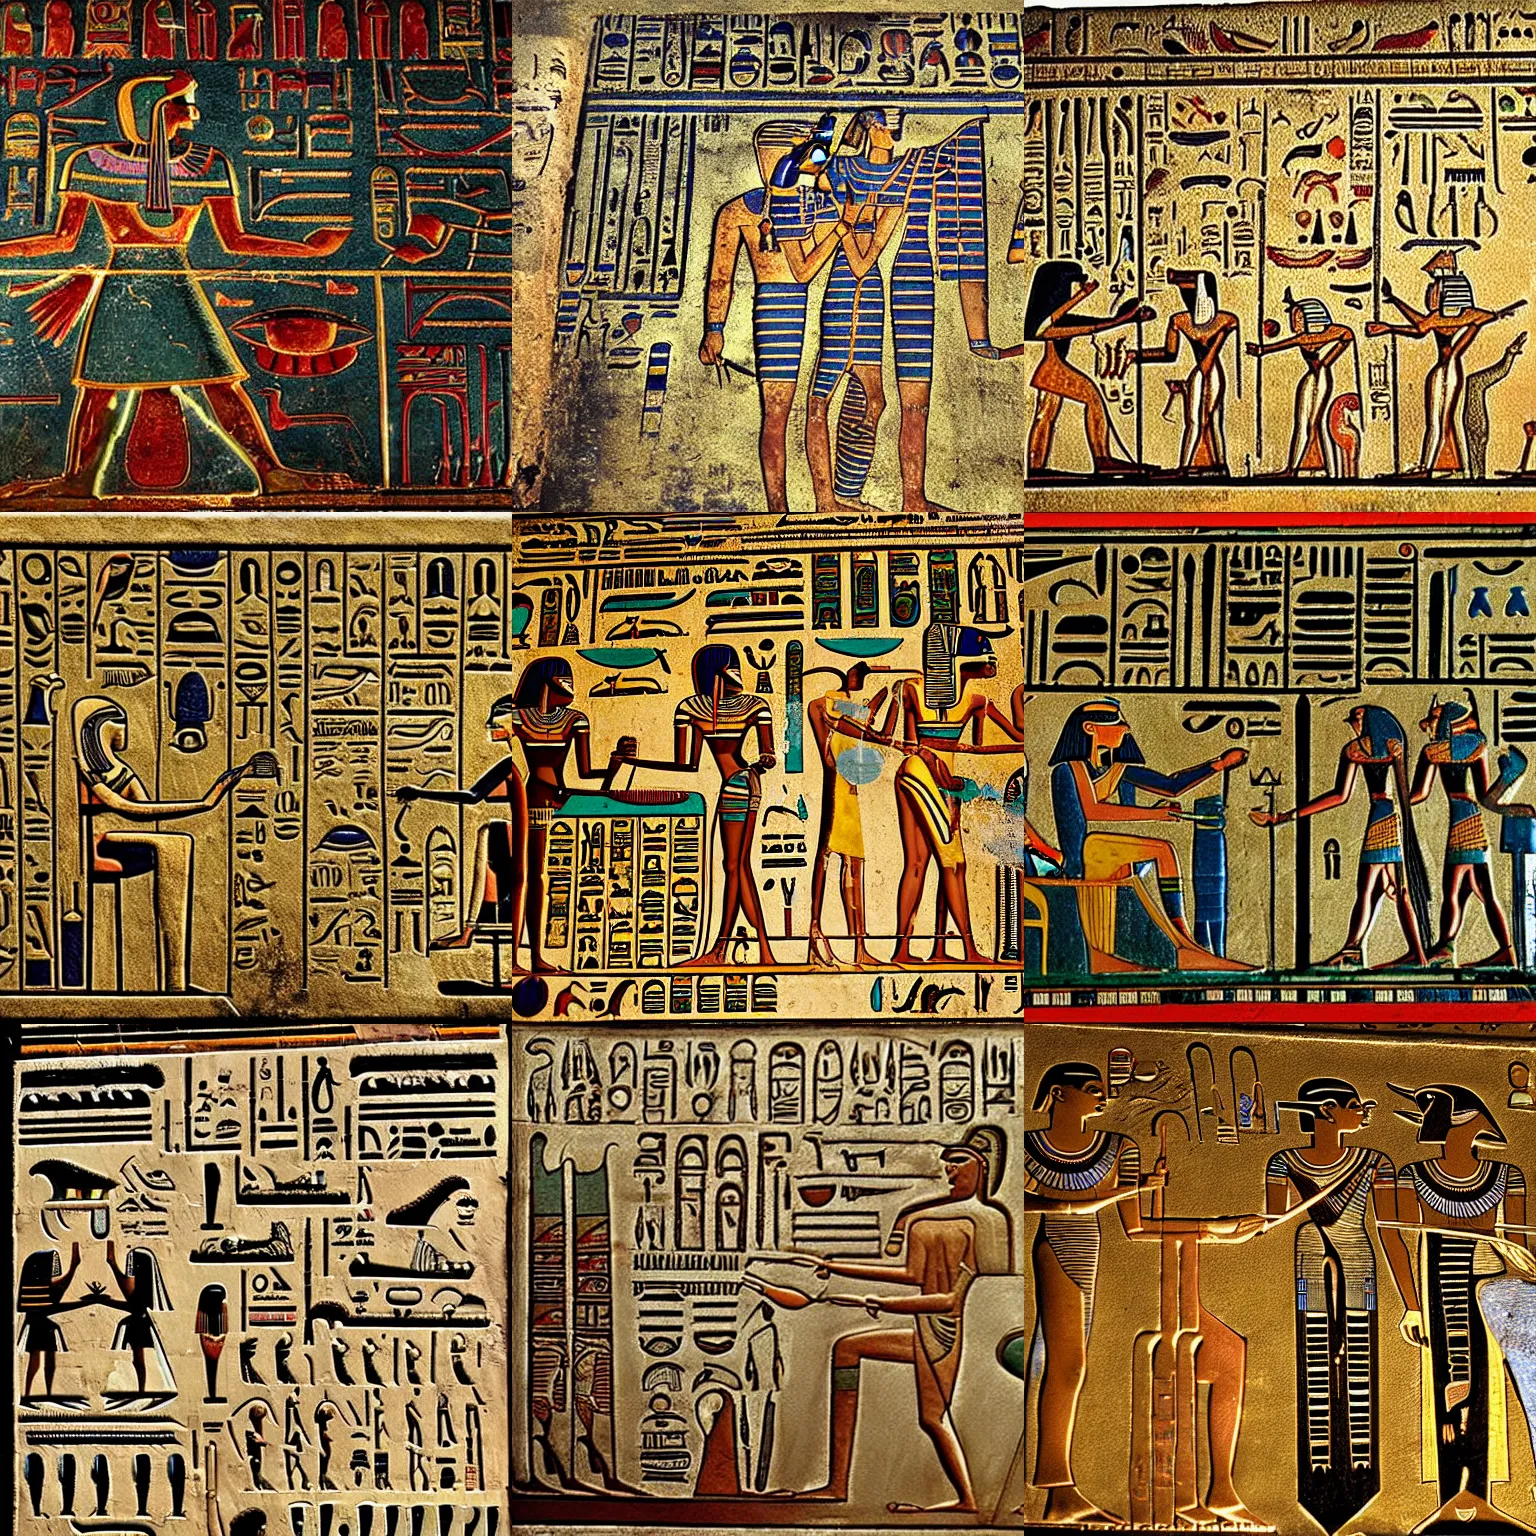 Prompt: egyptian hieroglyphics depicting an alien invasion